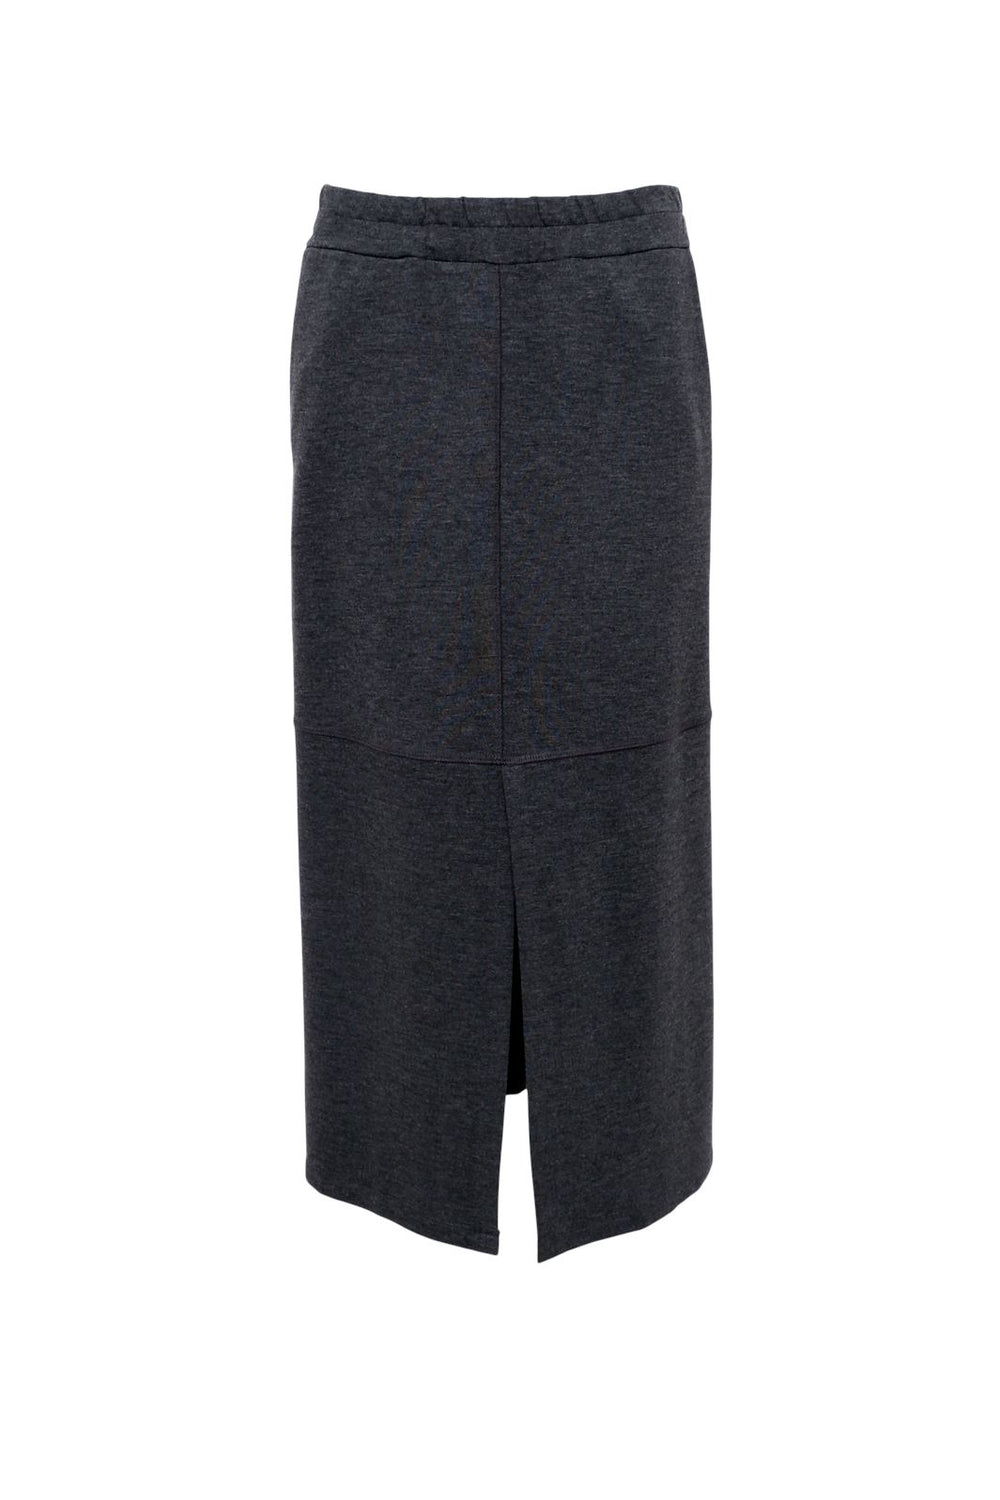 Black Colour - Bcjamie Slit Skirt - Dark Grey